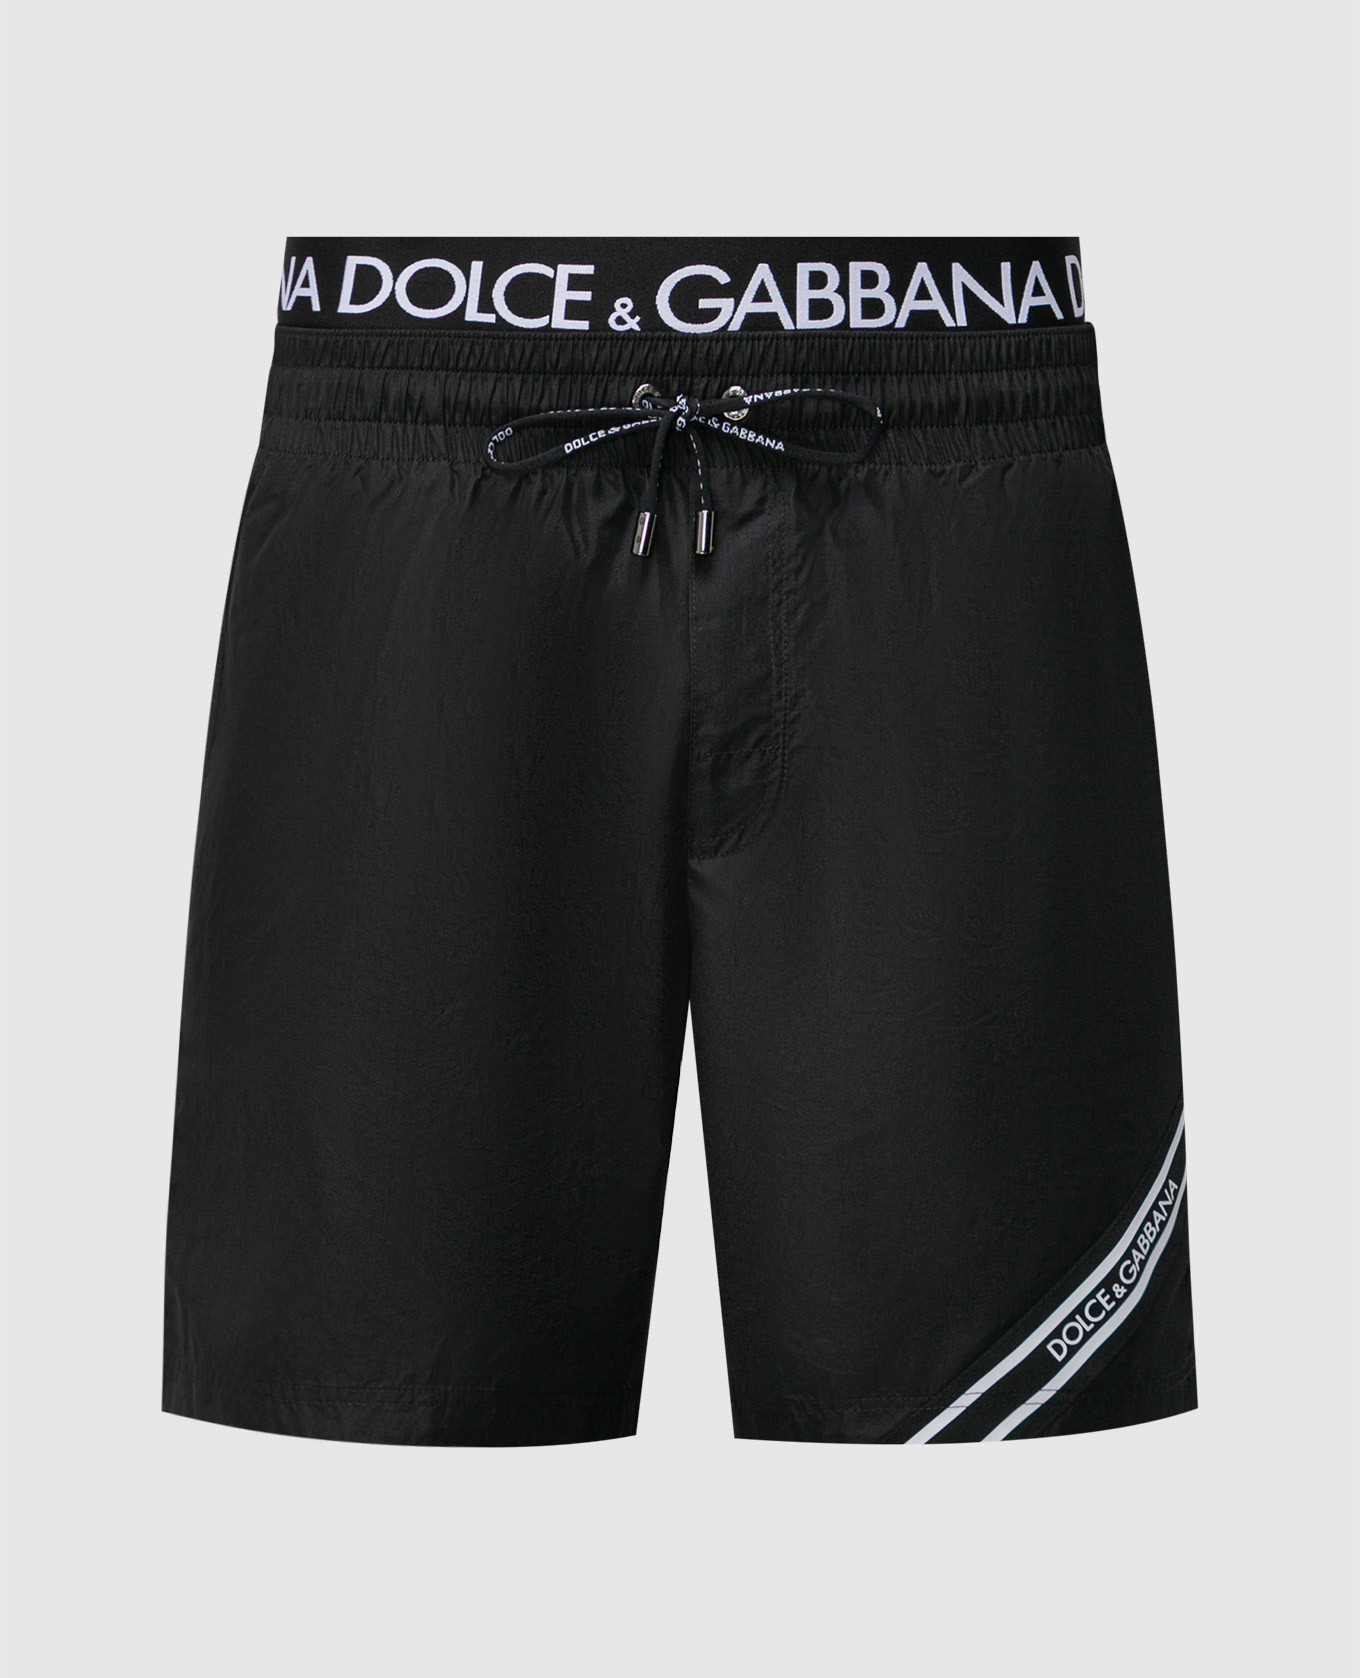 Black swim shorts with Dolce&Gabbana logo